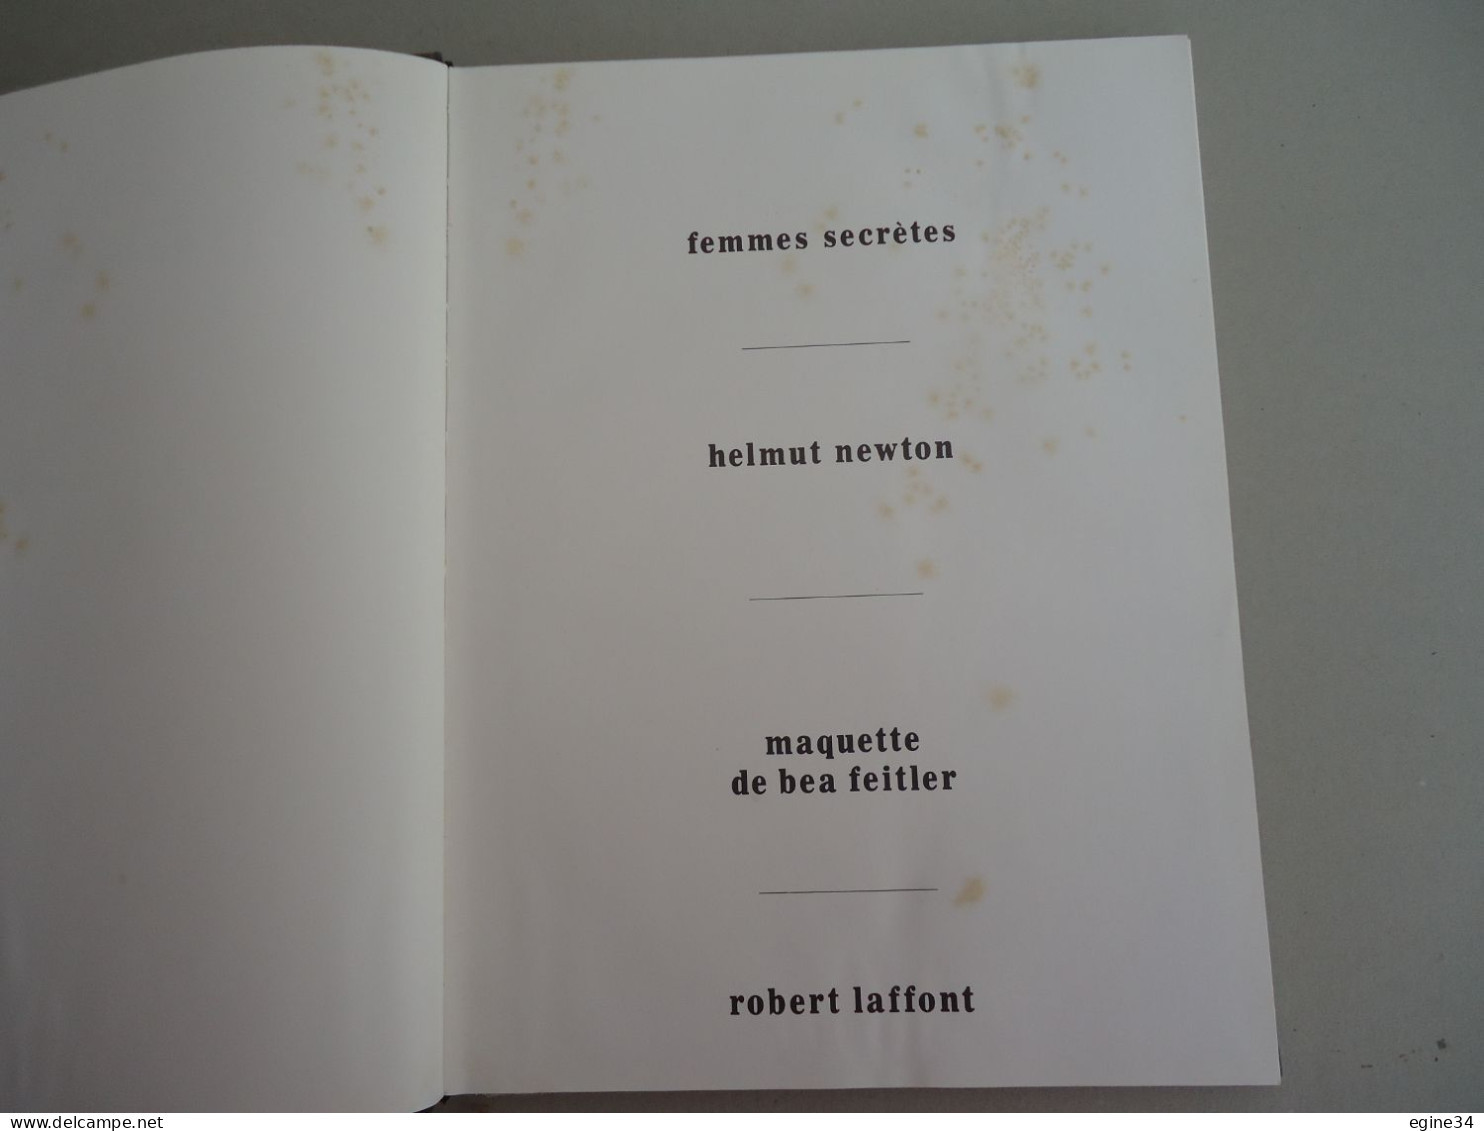 Editions R. Laffont - Helmut Newton - Femmes Secrètes - 1976 - Texte Philippe Garner - Fotografía